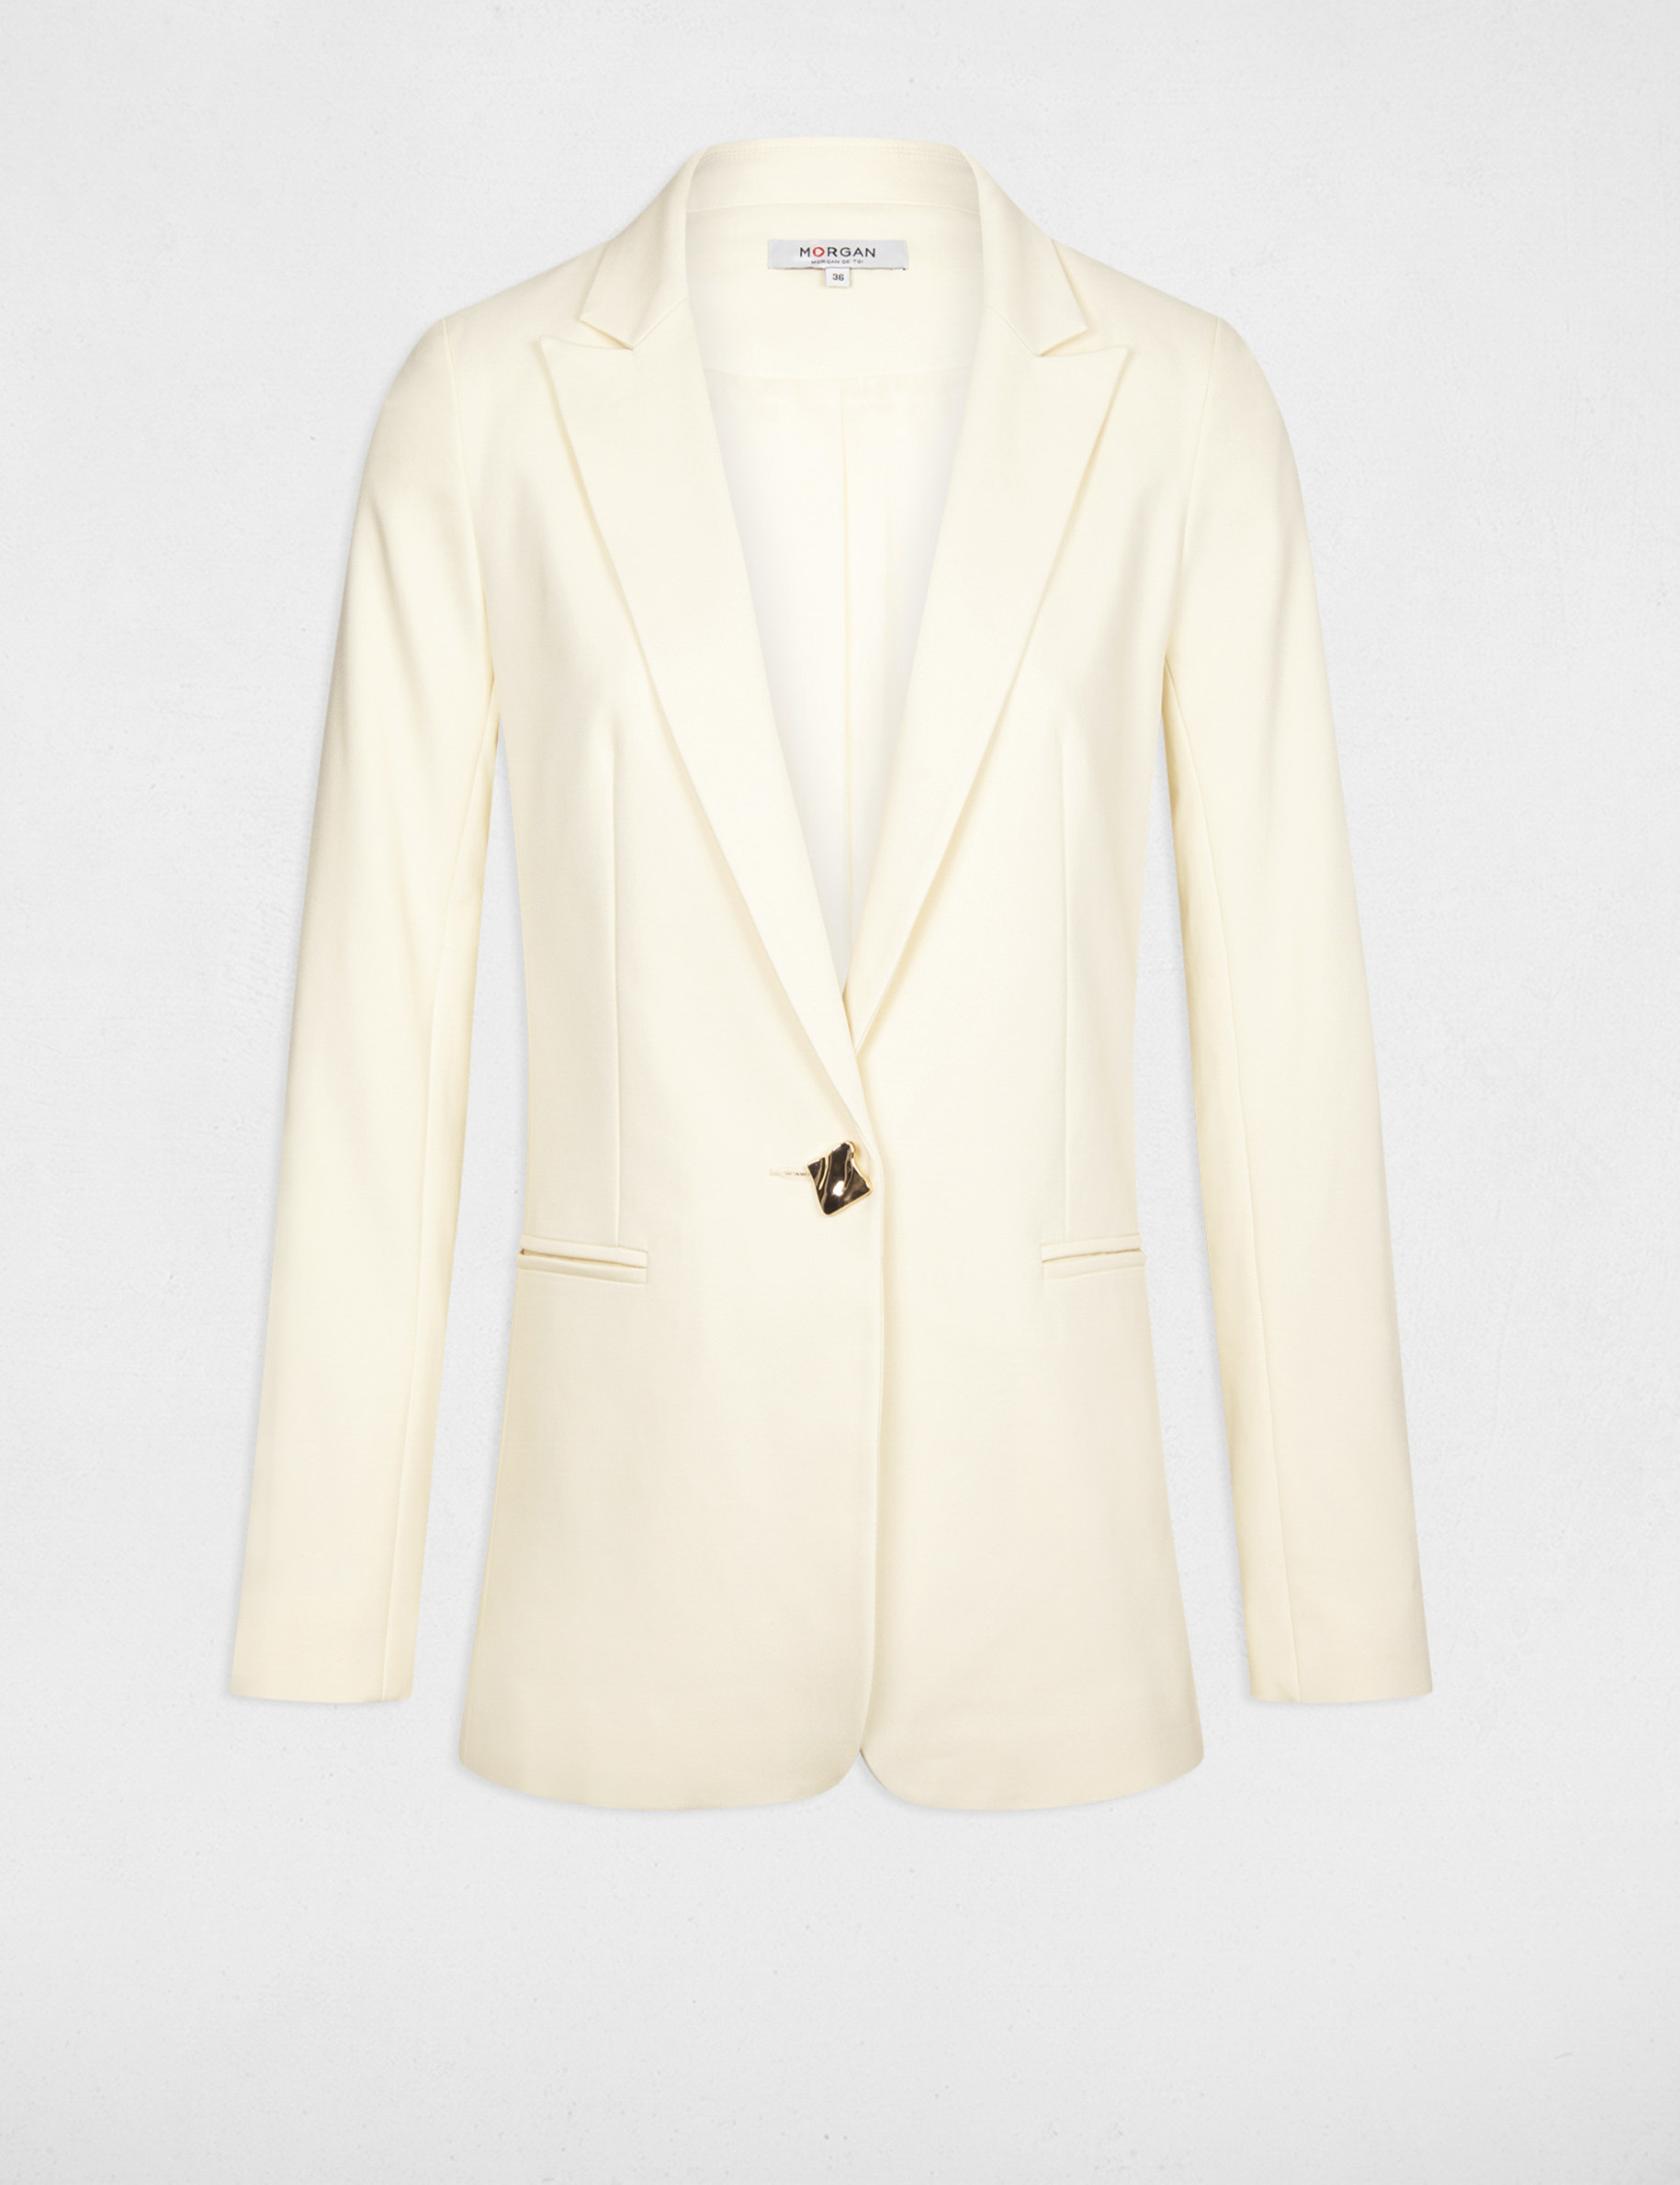 Waisted jacket long sleeves vanilla ladies'